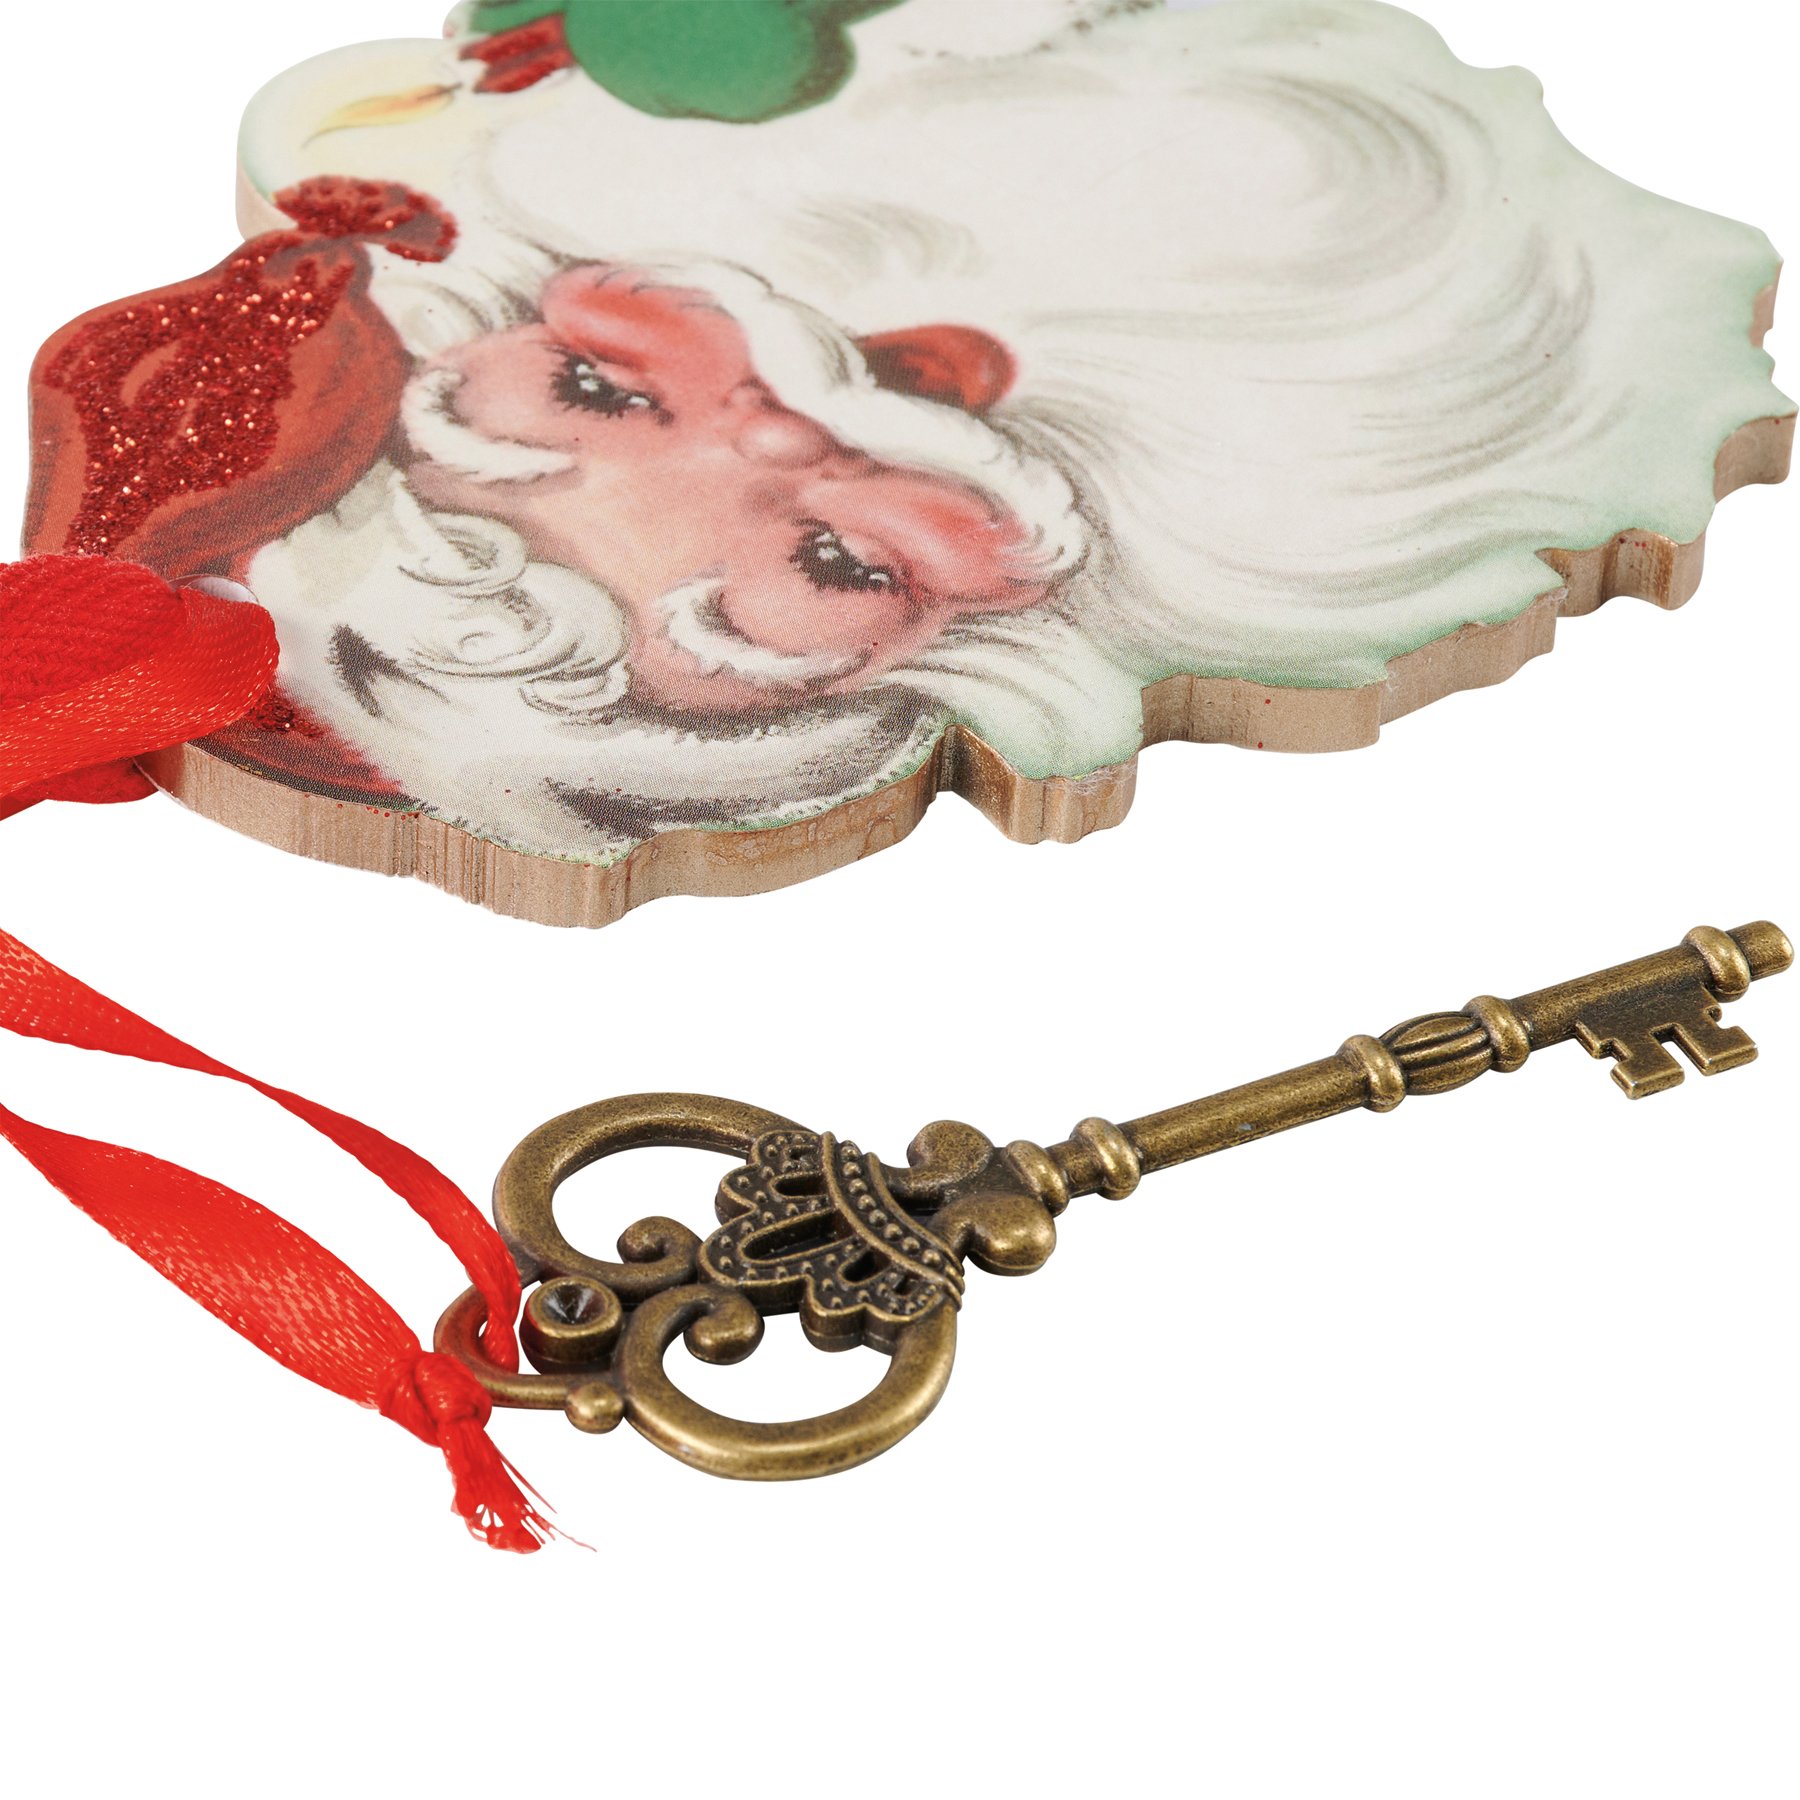  10 Sets Santa's Key for No Chimney House Metal Key